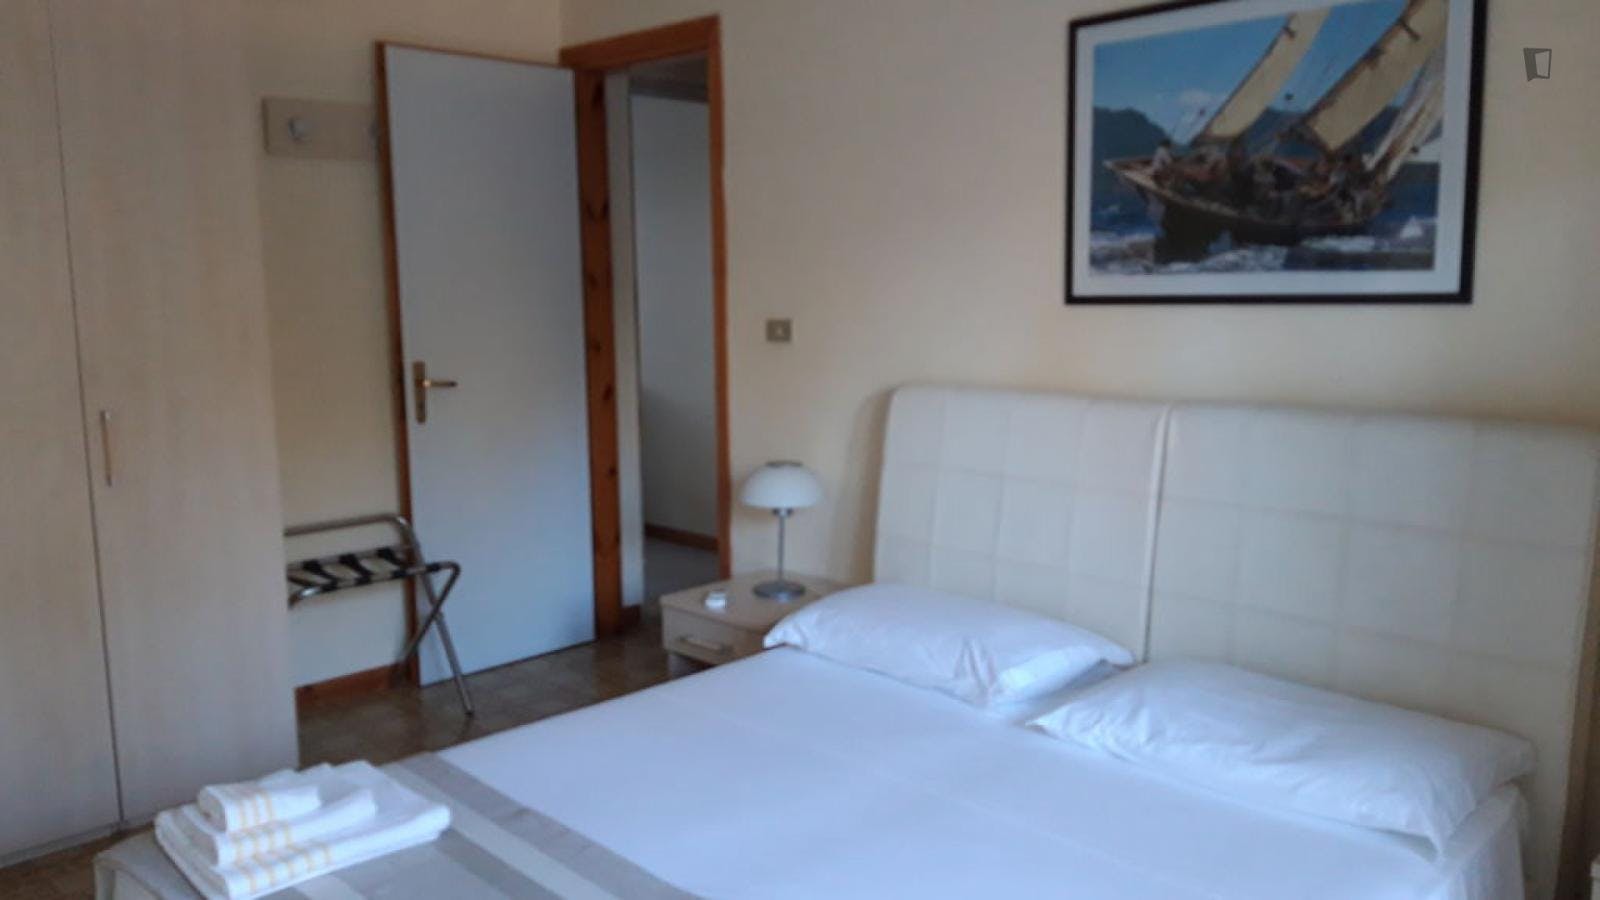 1-Bedroom apartment in sunny San Cataldo